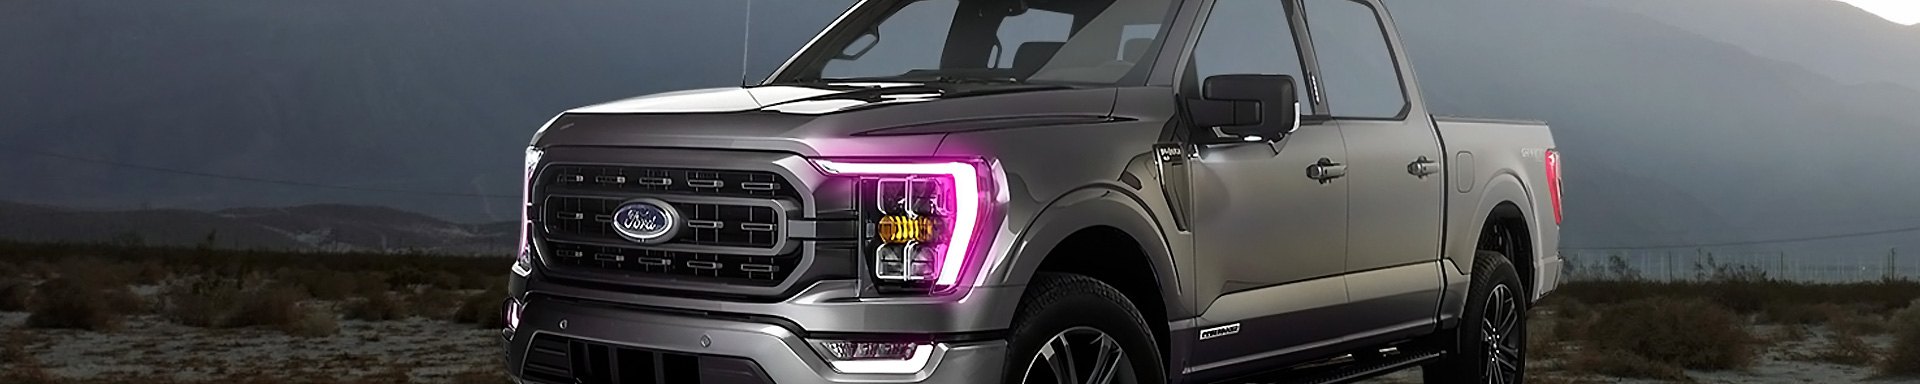 Oracle Lighting ColorSHIFT LED DRL Upgrade Kit for Ford F-150 Trucks